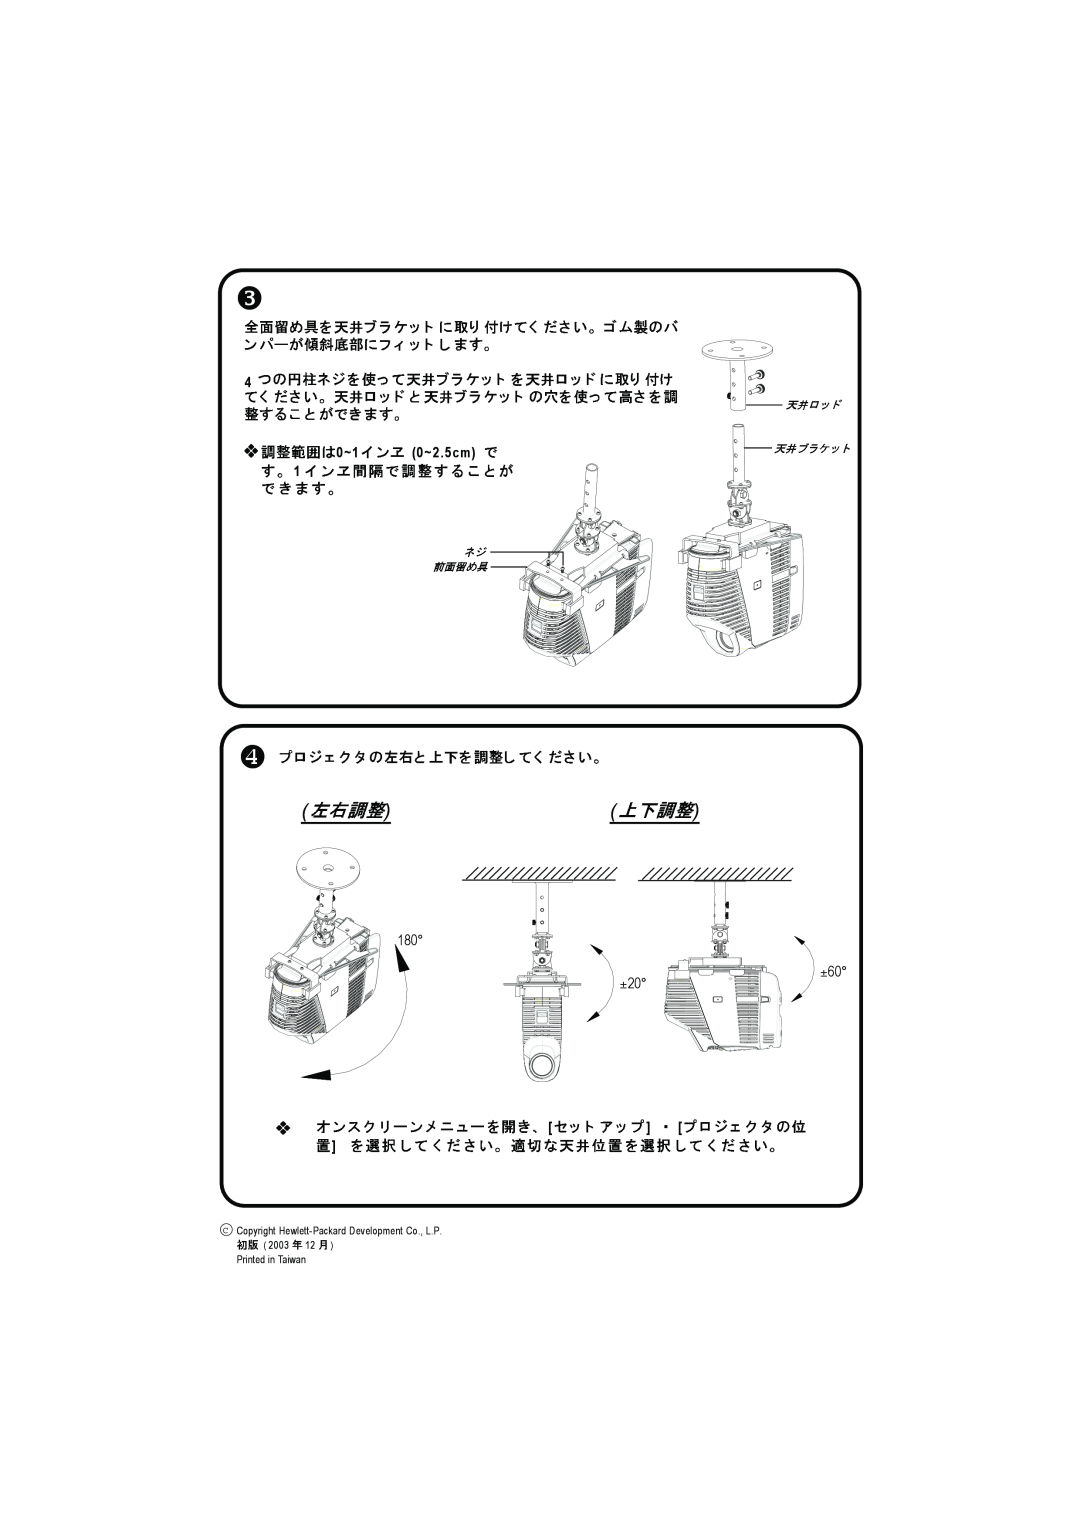 HP mp3130 manual ™0~1 0~2.5cm, 180 ±20, C Copyright Hewlett-Packard Development Co., L.P. 2003, Printed in Taiwan 